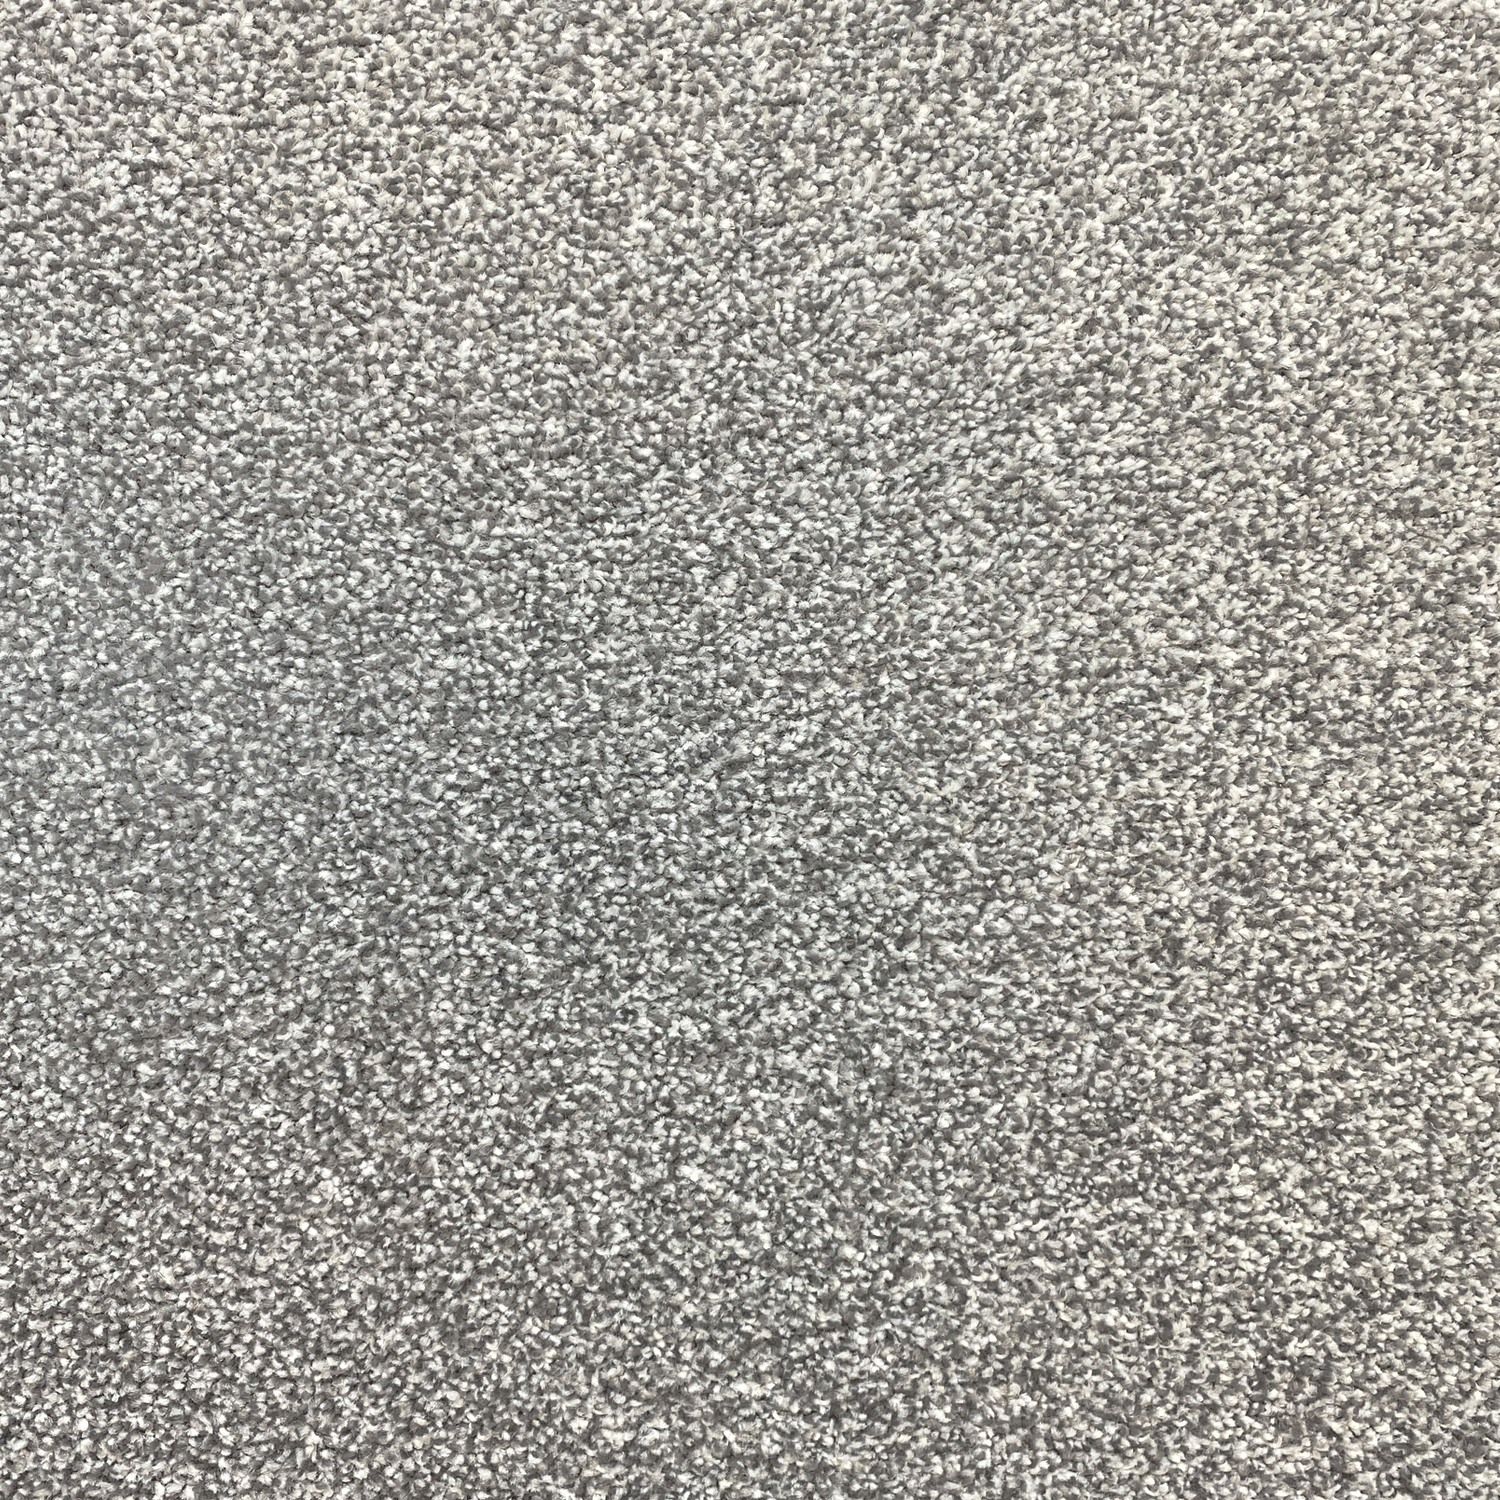 Carpet name: Smart Textures Mercury